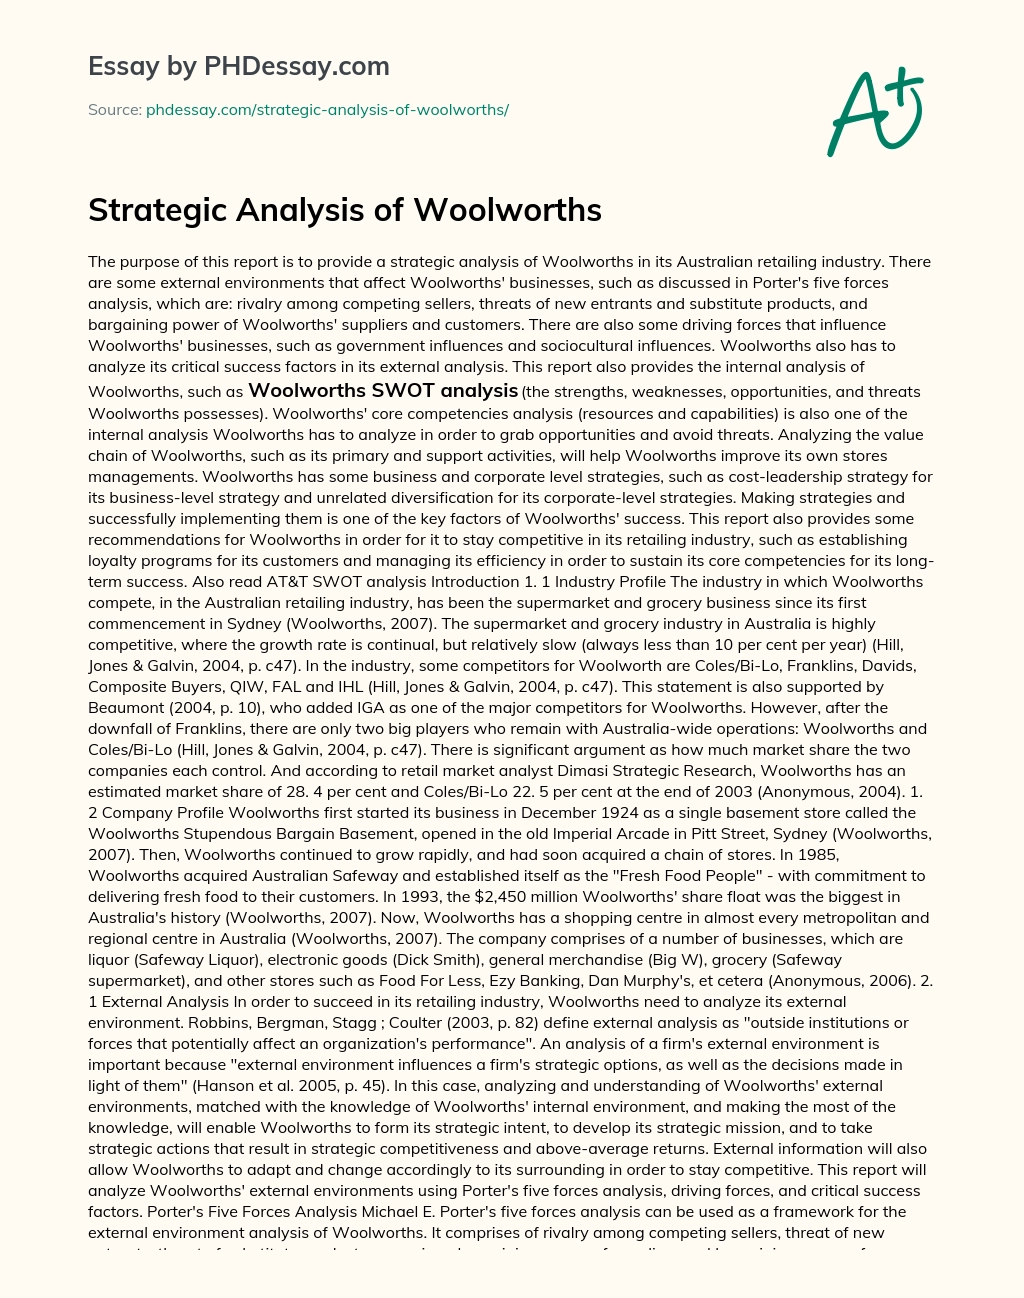 Strategic Analysis of Woolworths essay